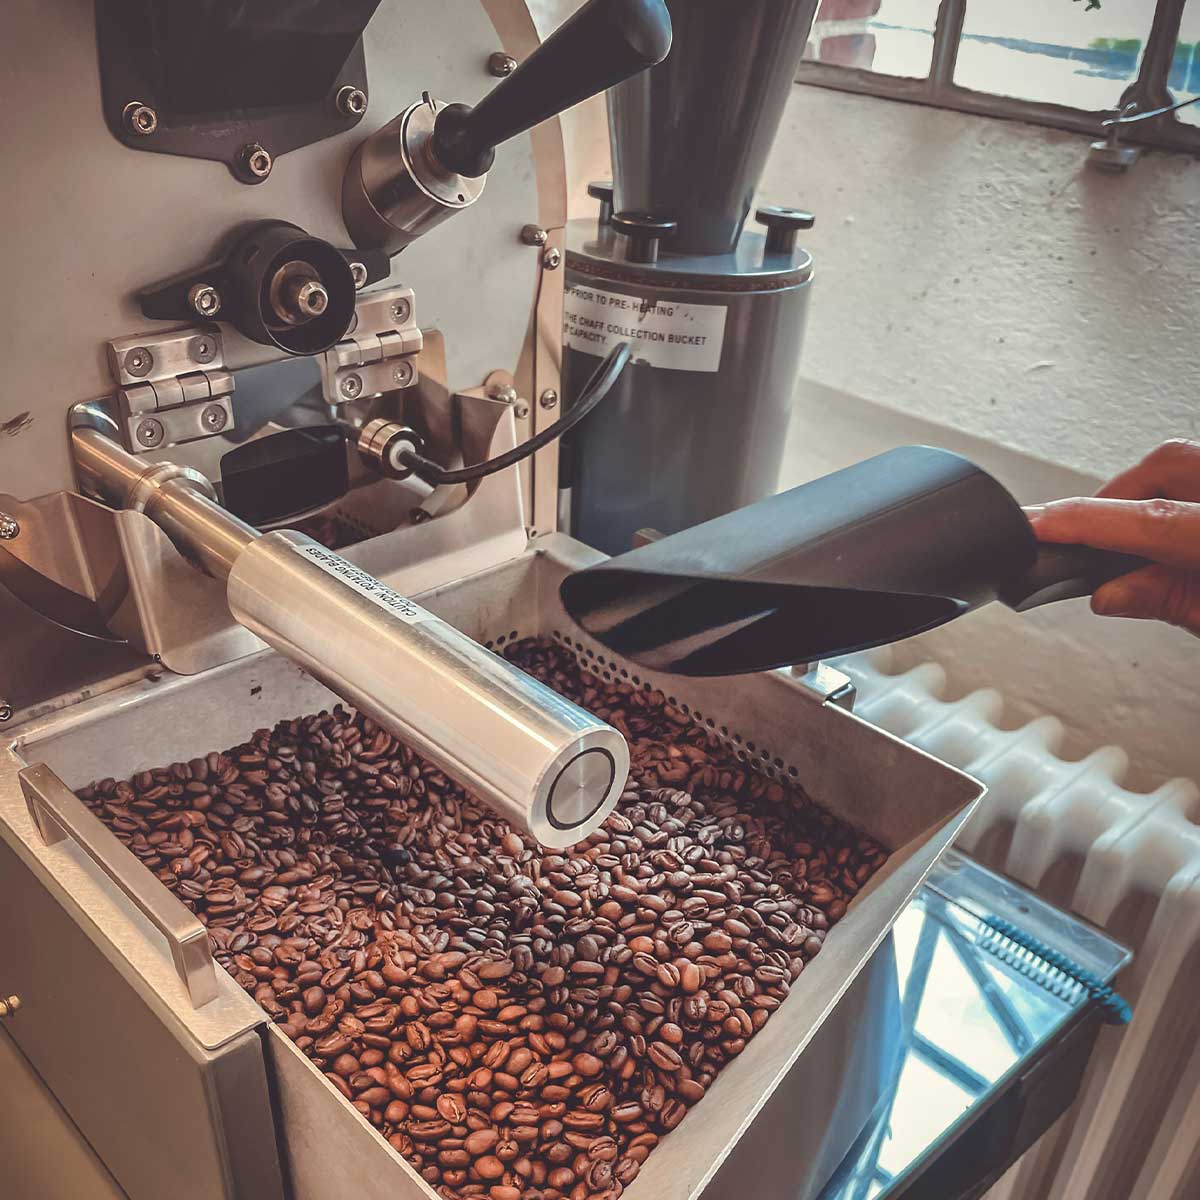 kaffebønner i maskine til at riste dem